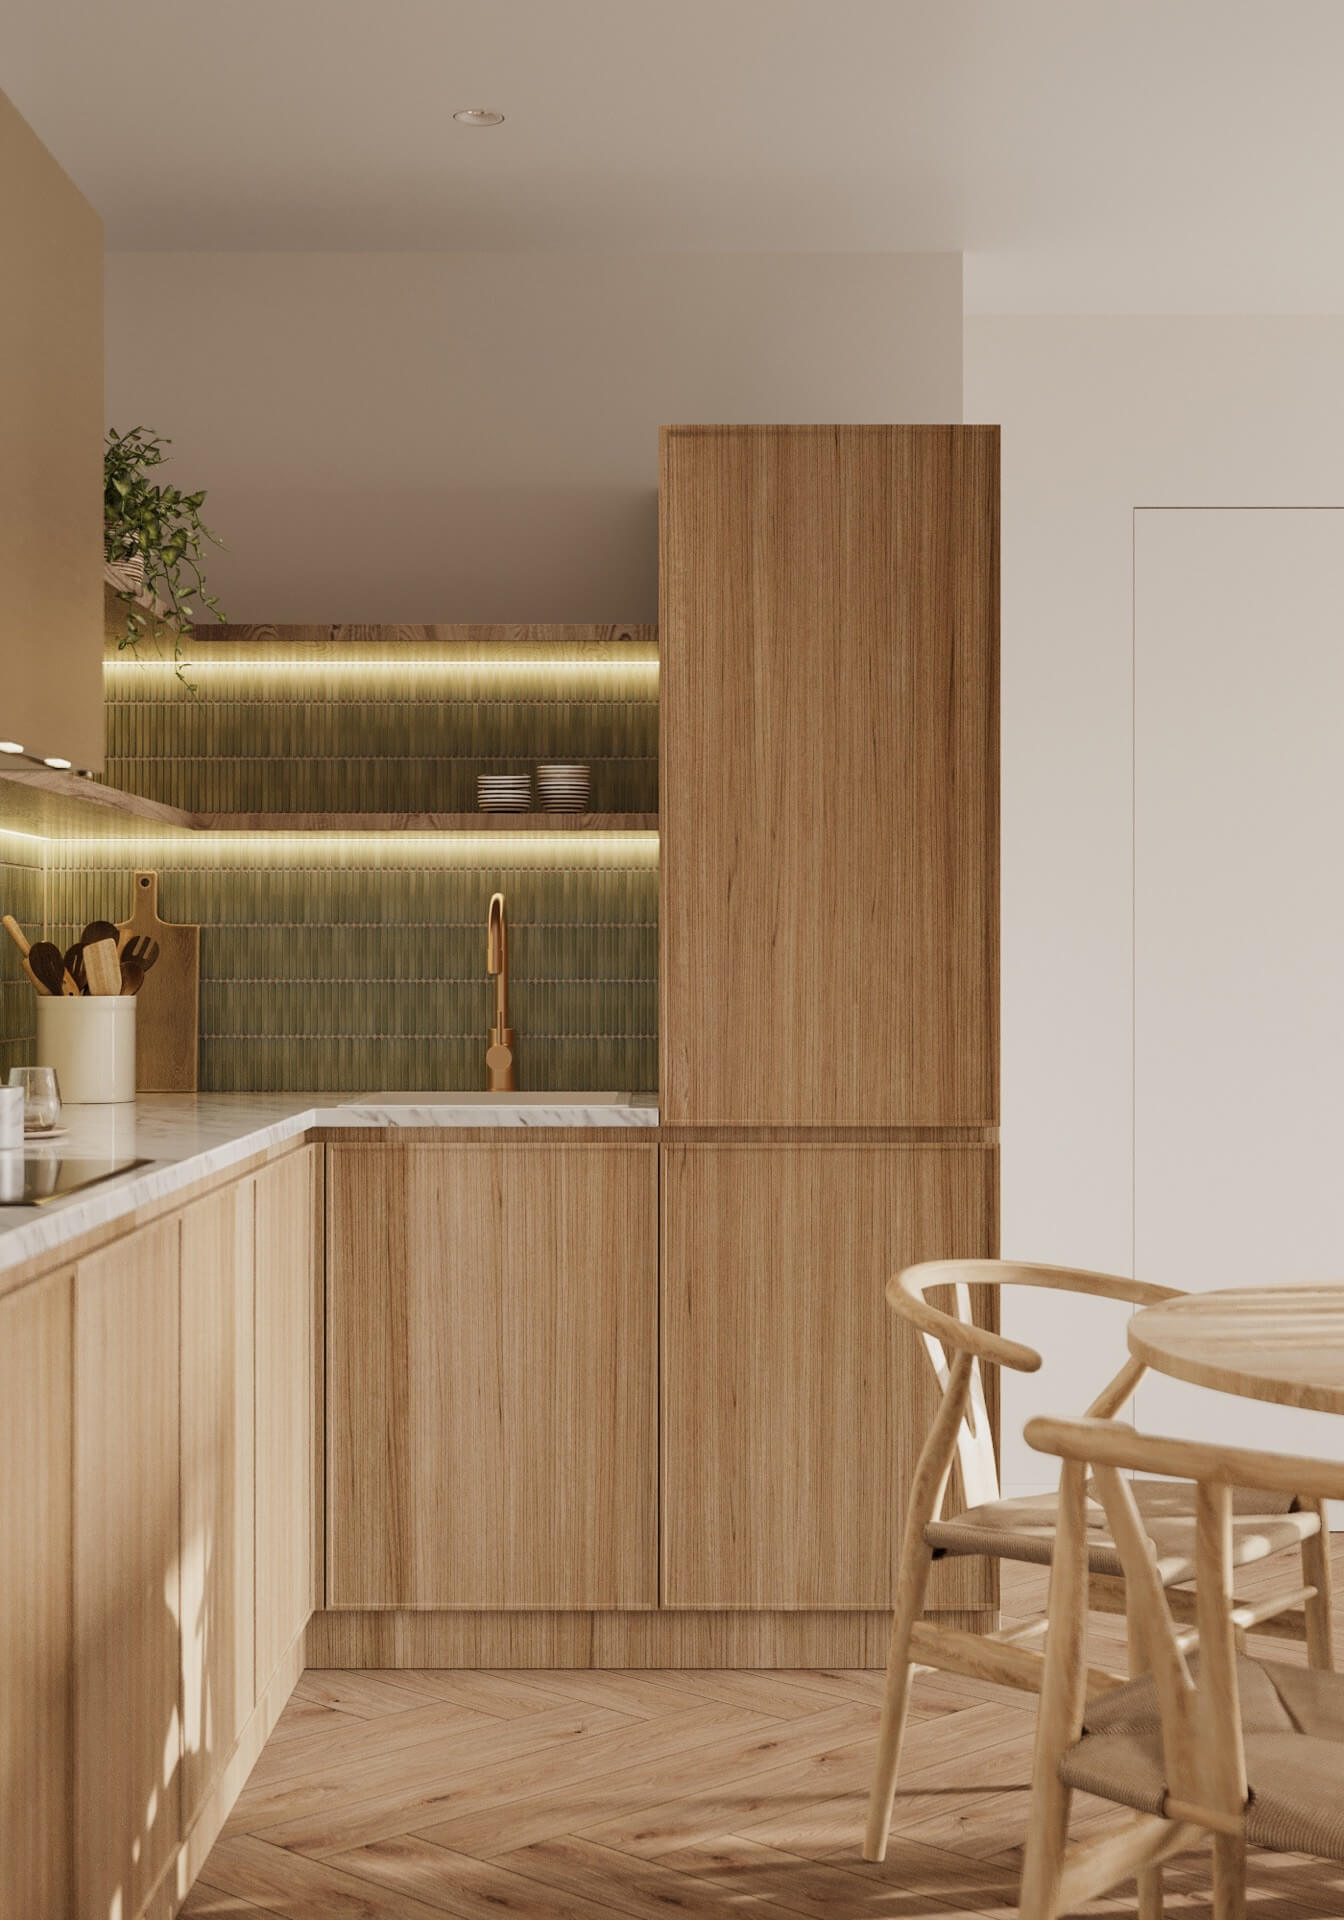 Japanese inspired kitchen by Interior designer Raluca Vaduva of Detail Movement